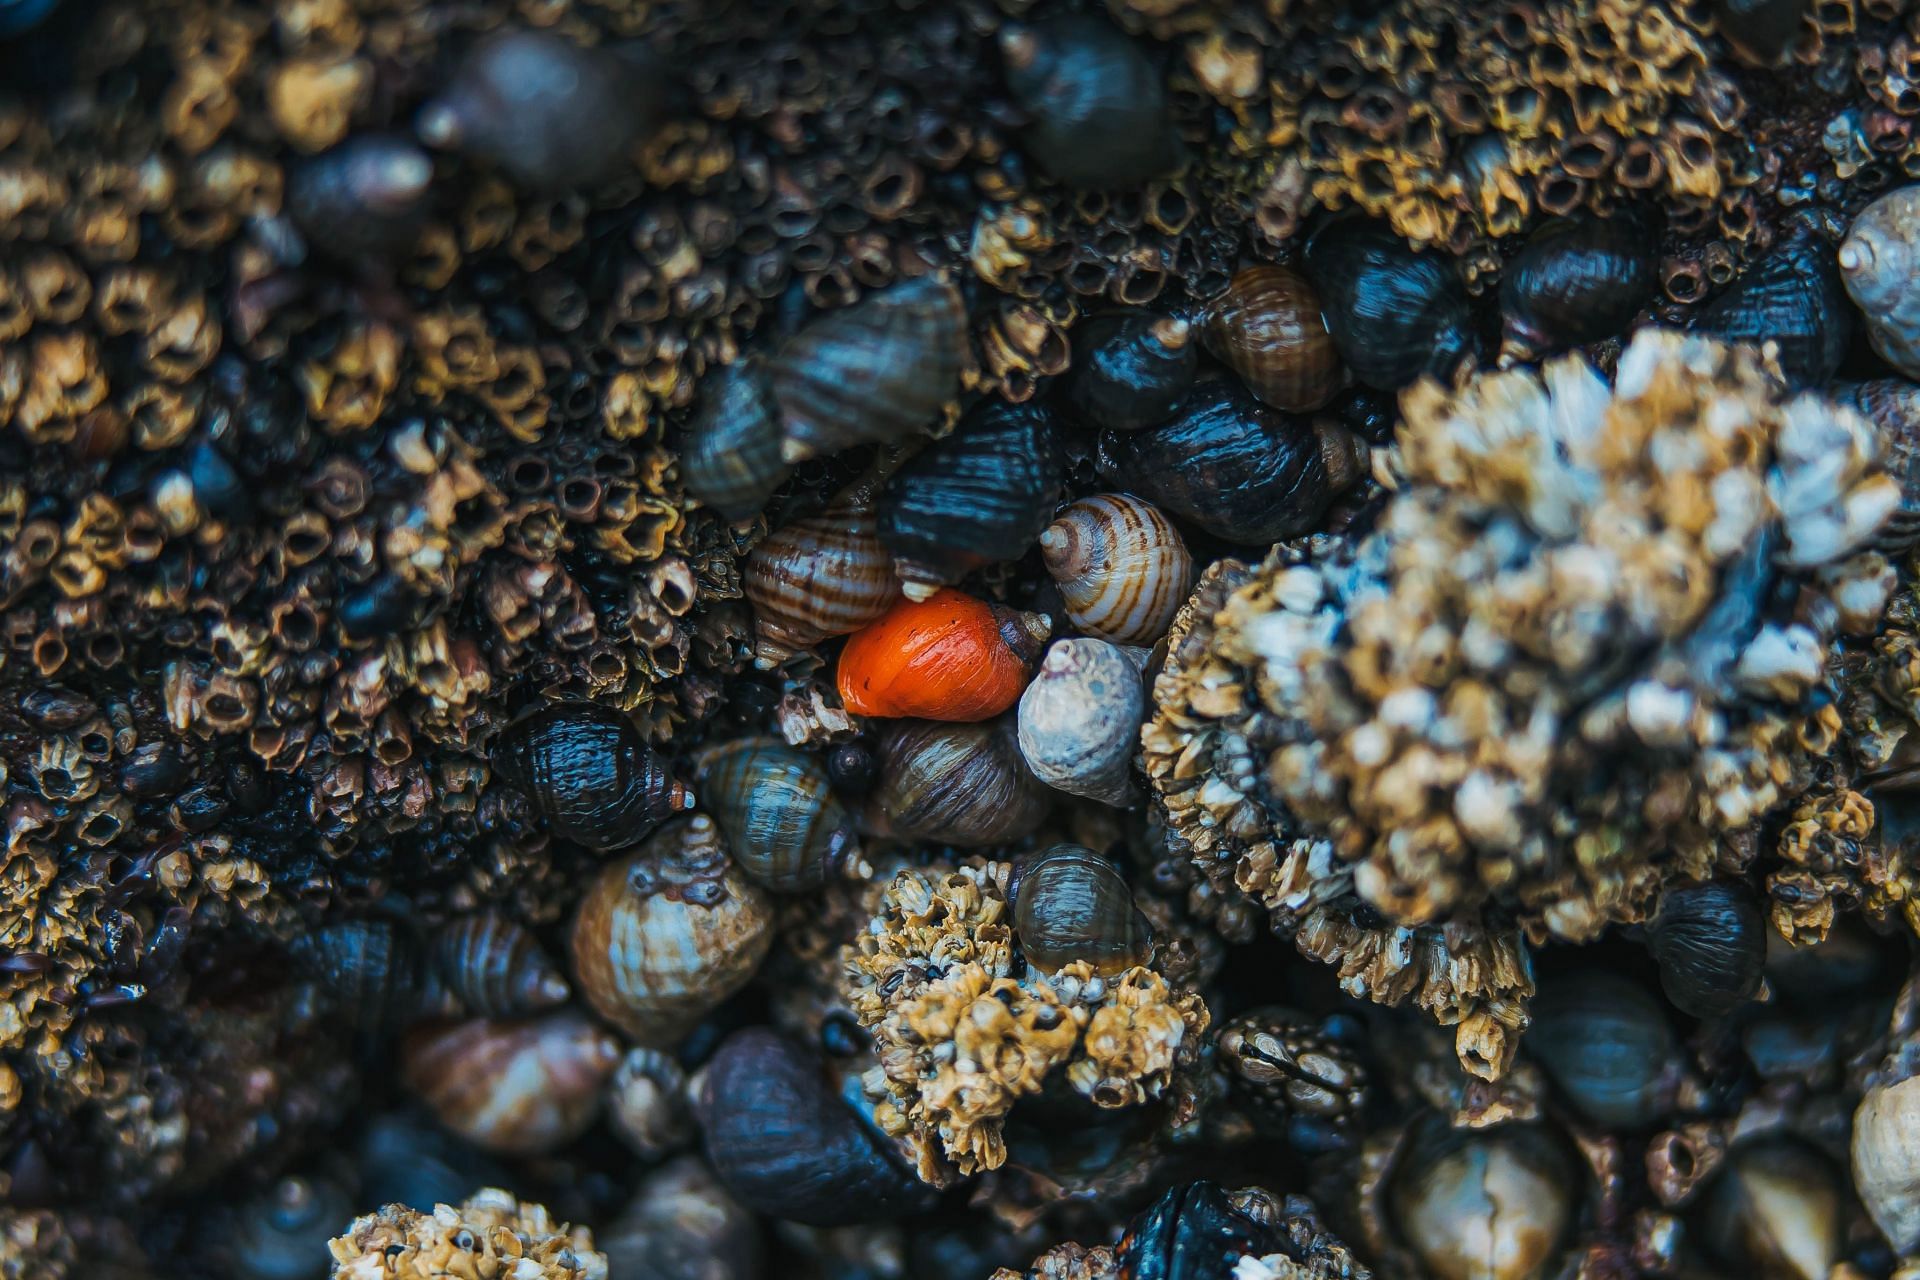 Snails are nutritious and tasty. (Image via Unsplash/Sunira Moses)